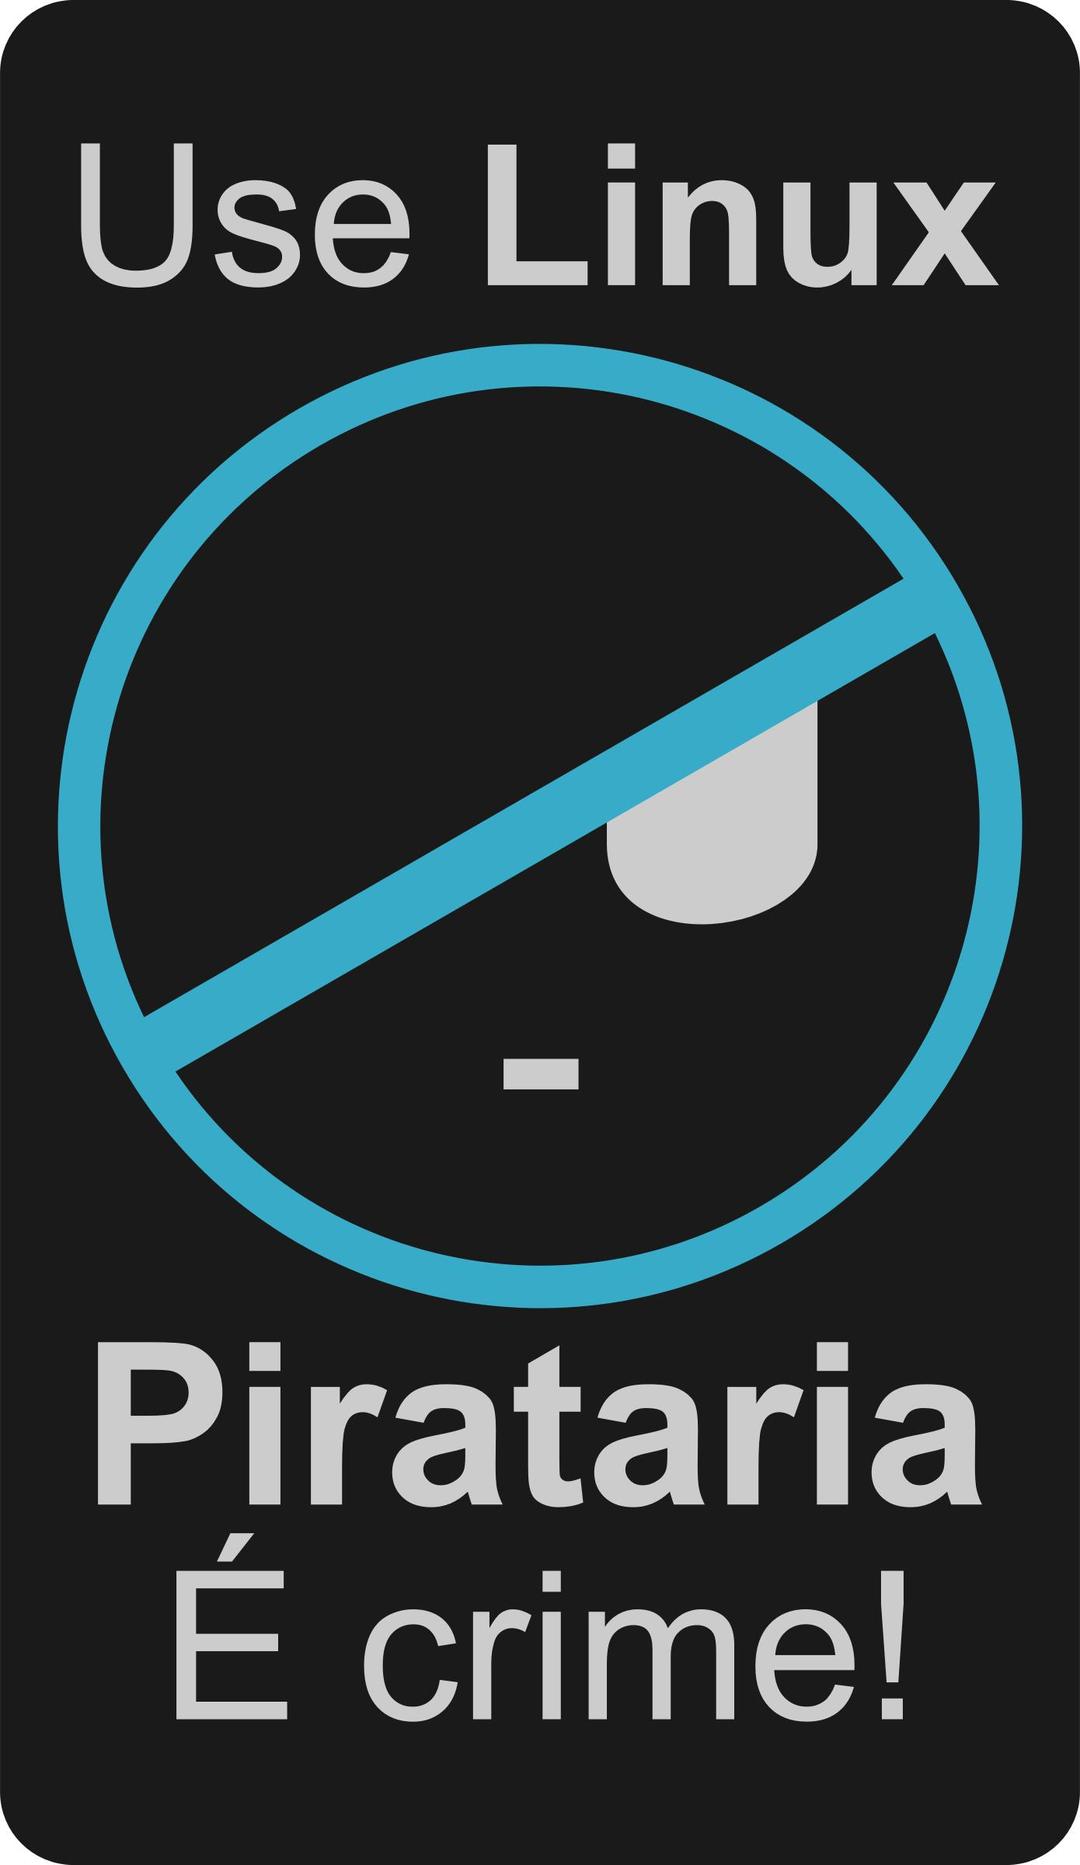 Pirataria Crime! Use Linux png transparent